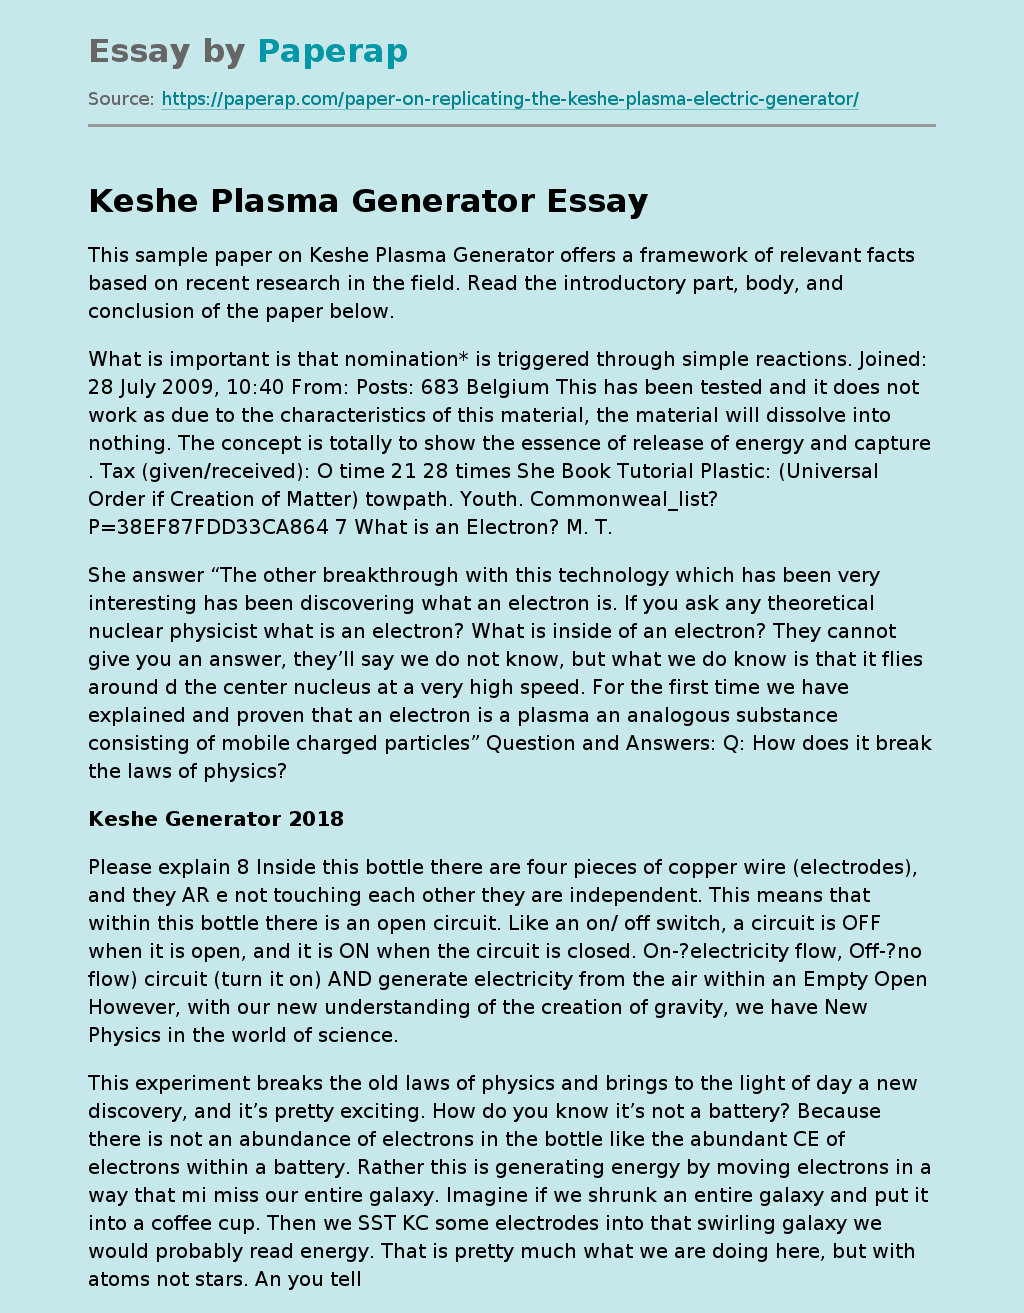 Keshe plasma generator